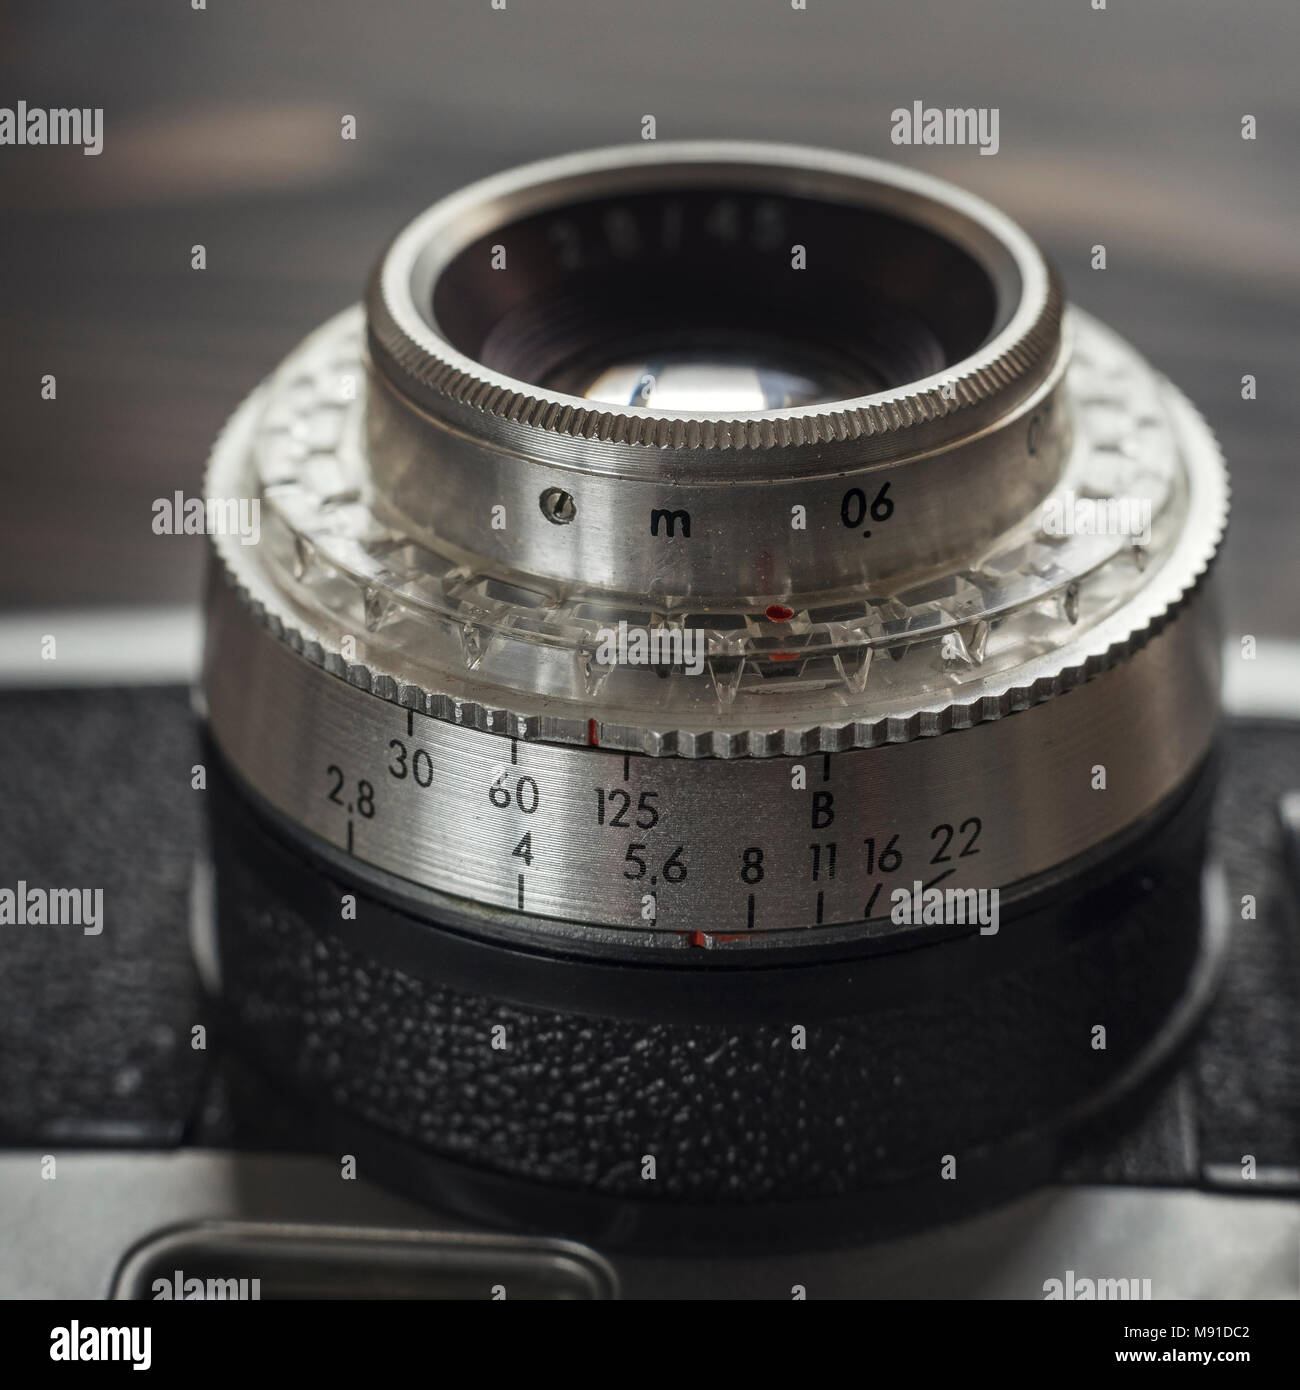 An old camera lens close-up. Shallow DOF. Stock Photo